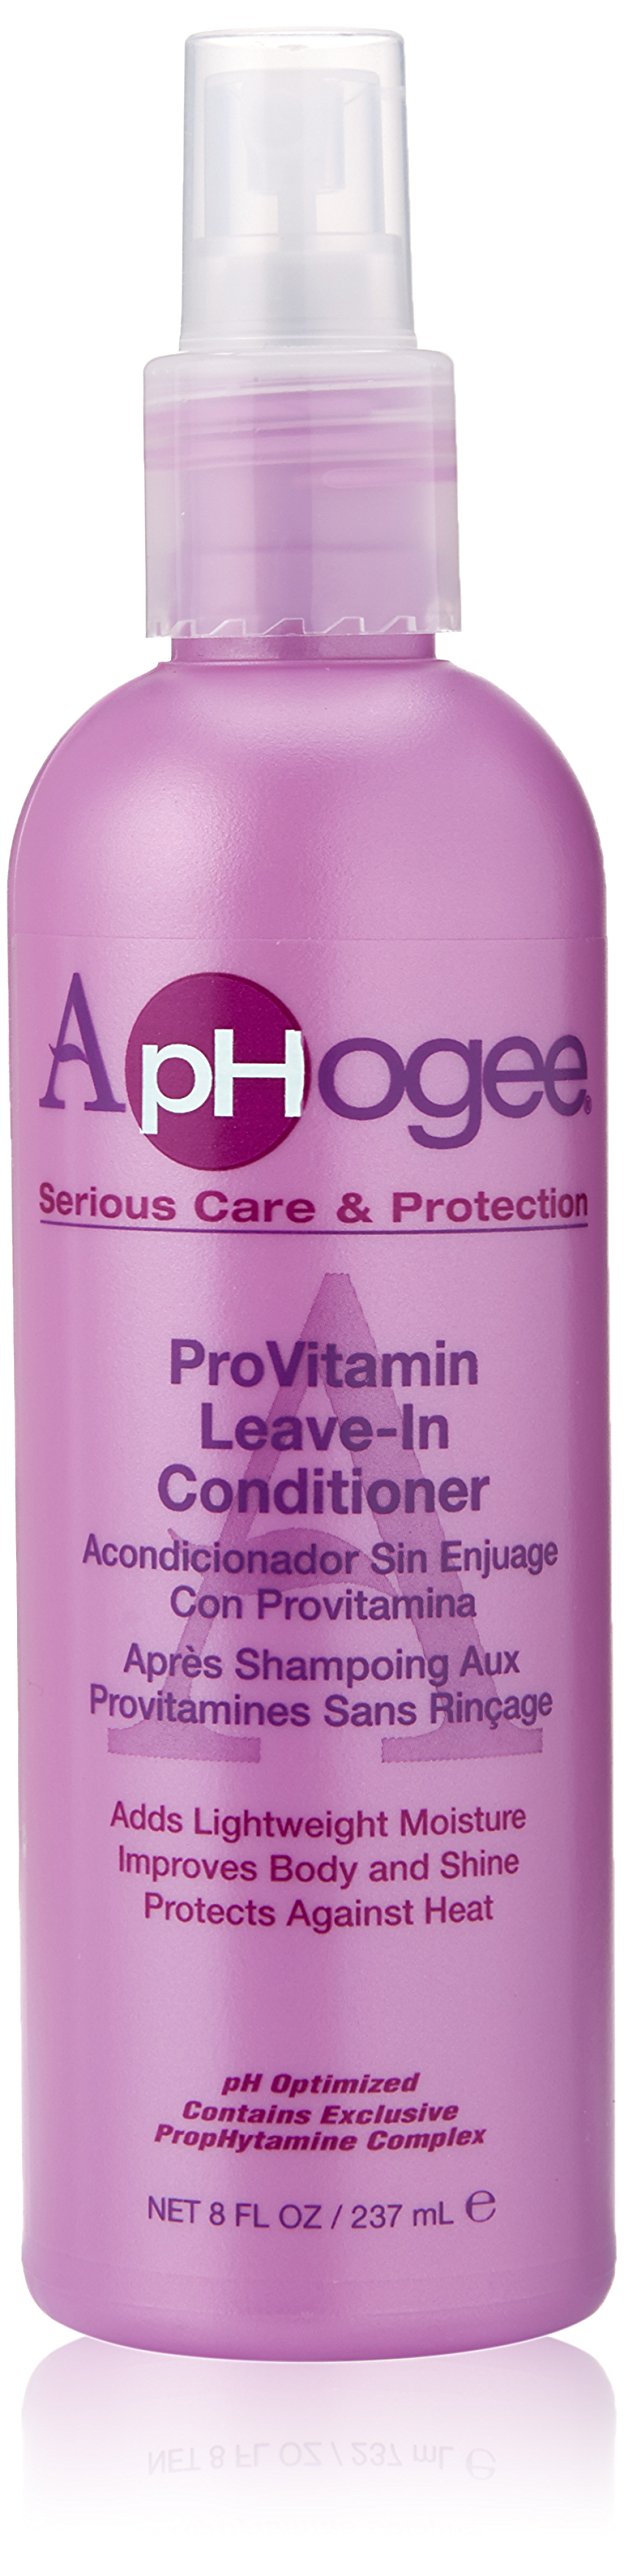 Aphogee Pro-Vitamin Leave-In Conditioner, 8 Fl Oz